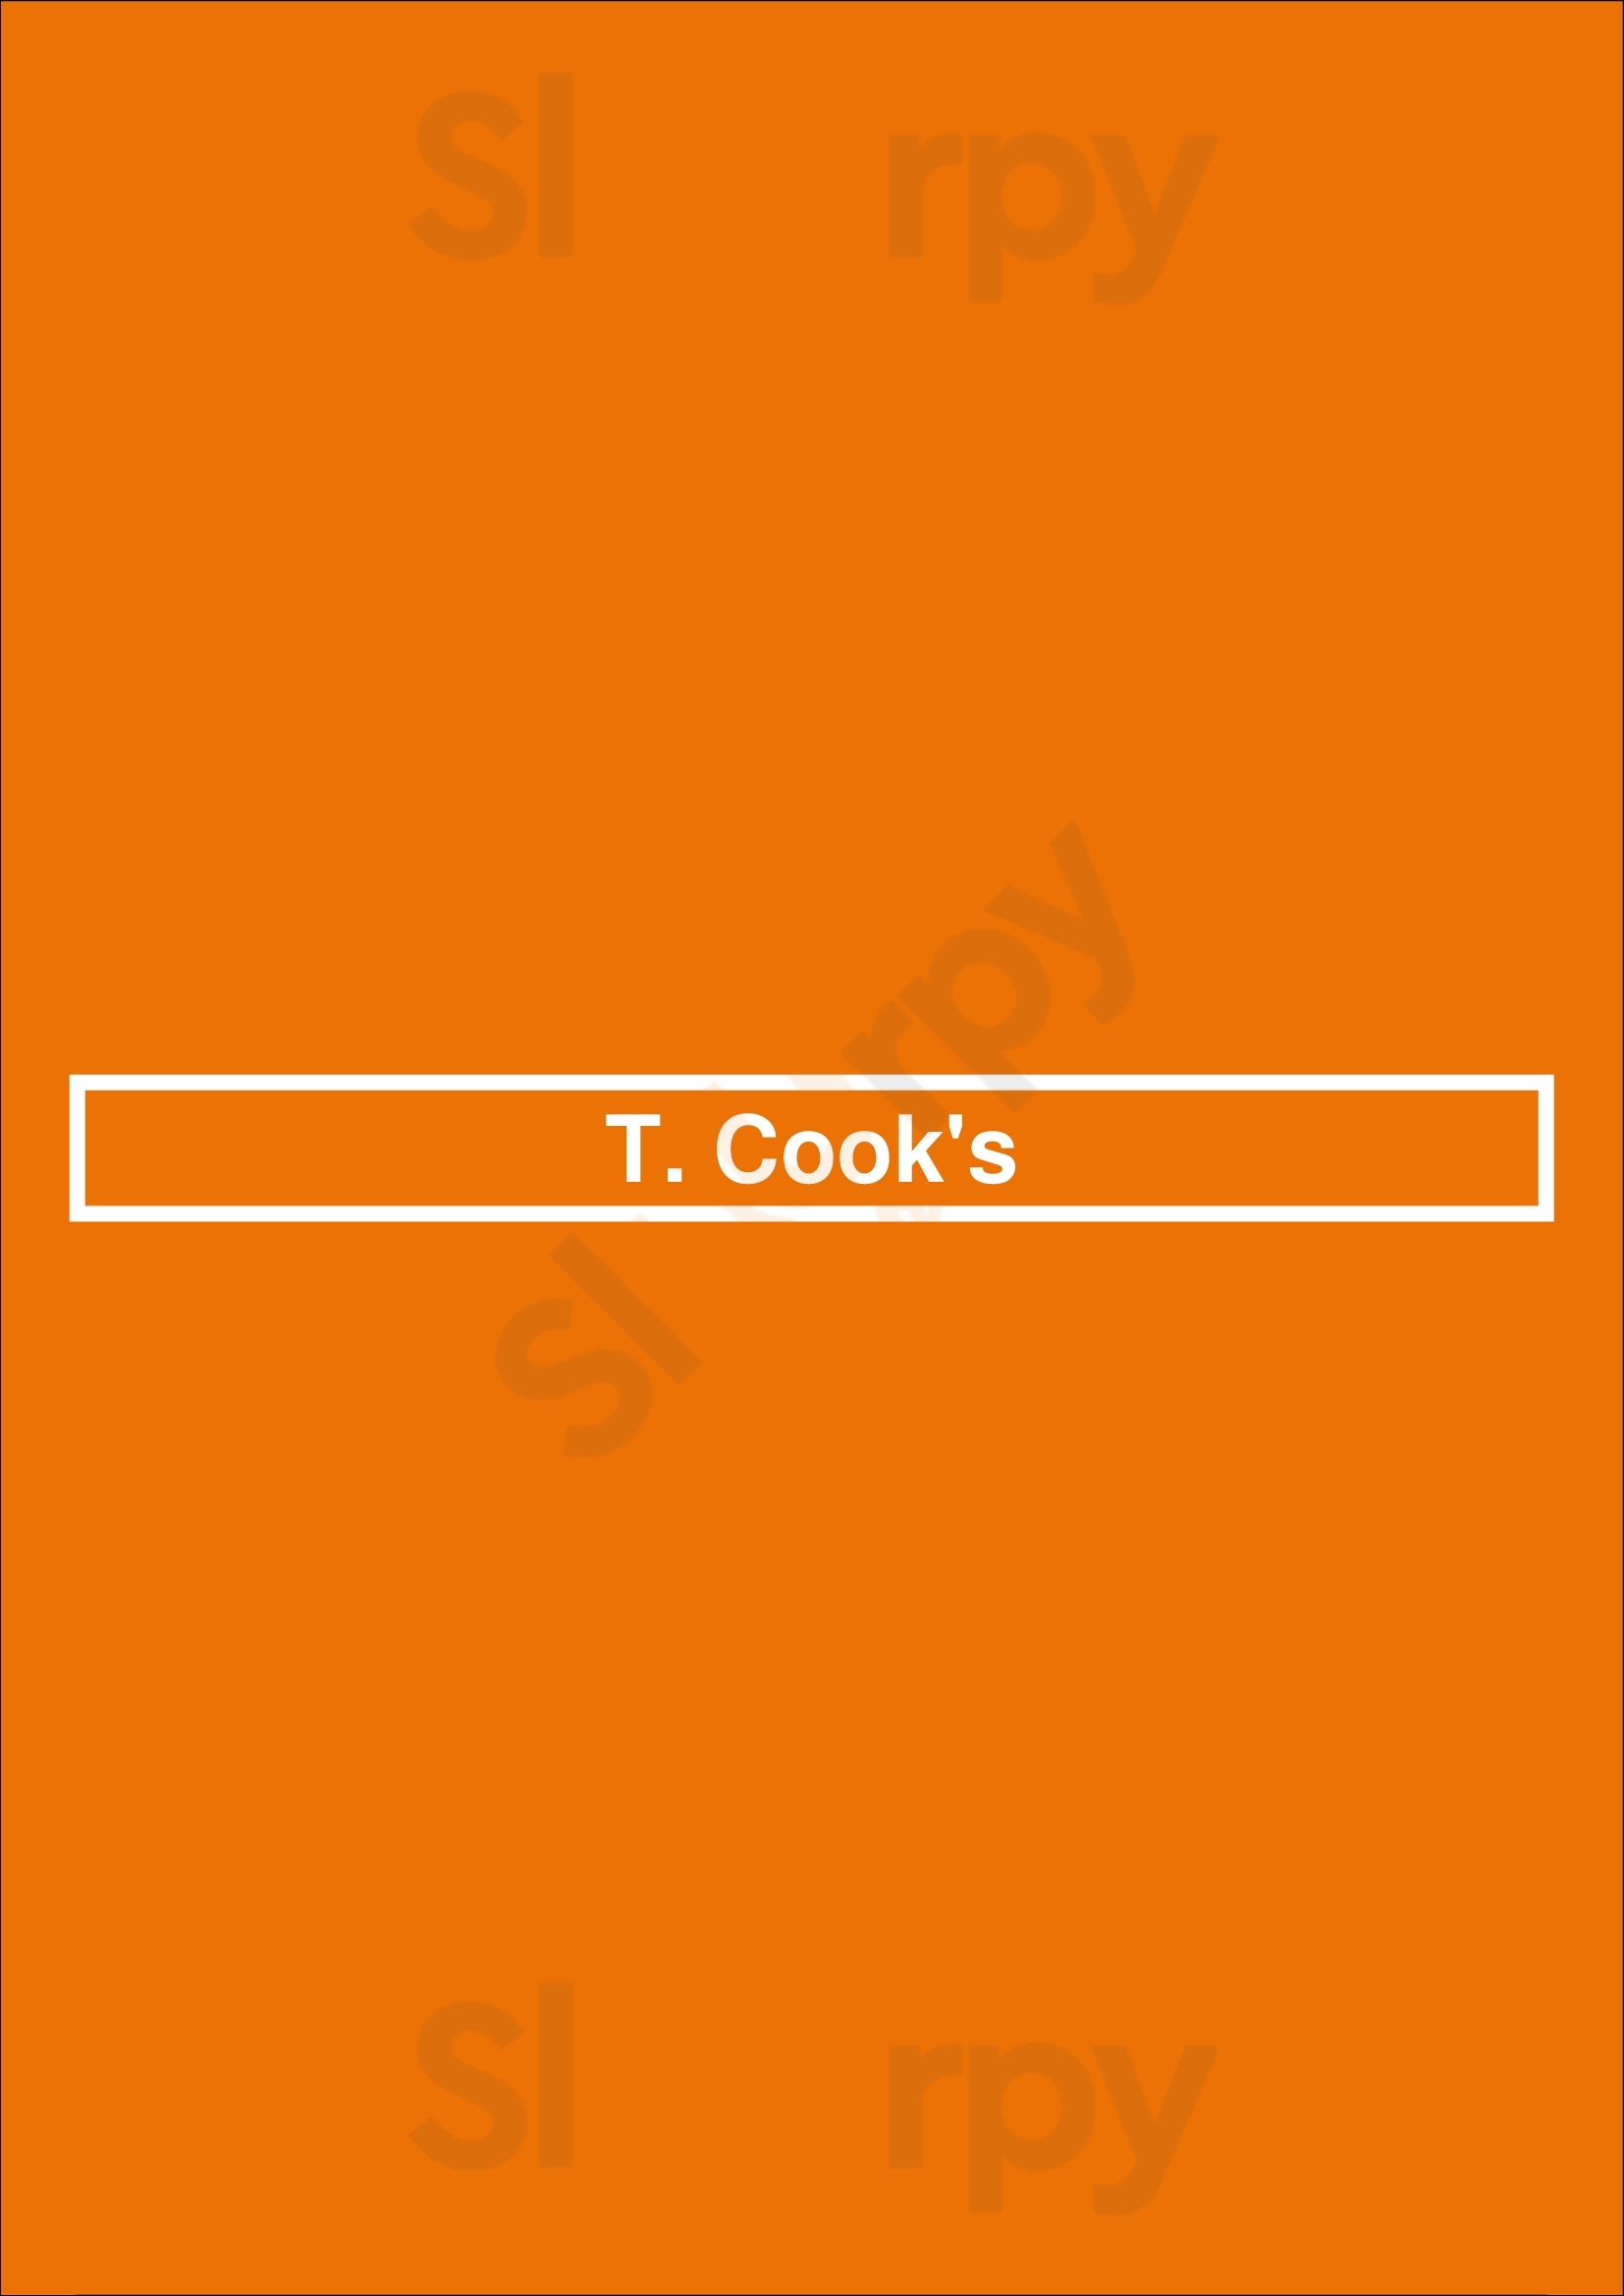 T. Cook's Phoenix Menu - 1